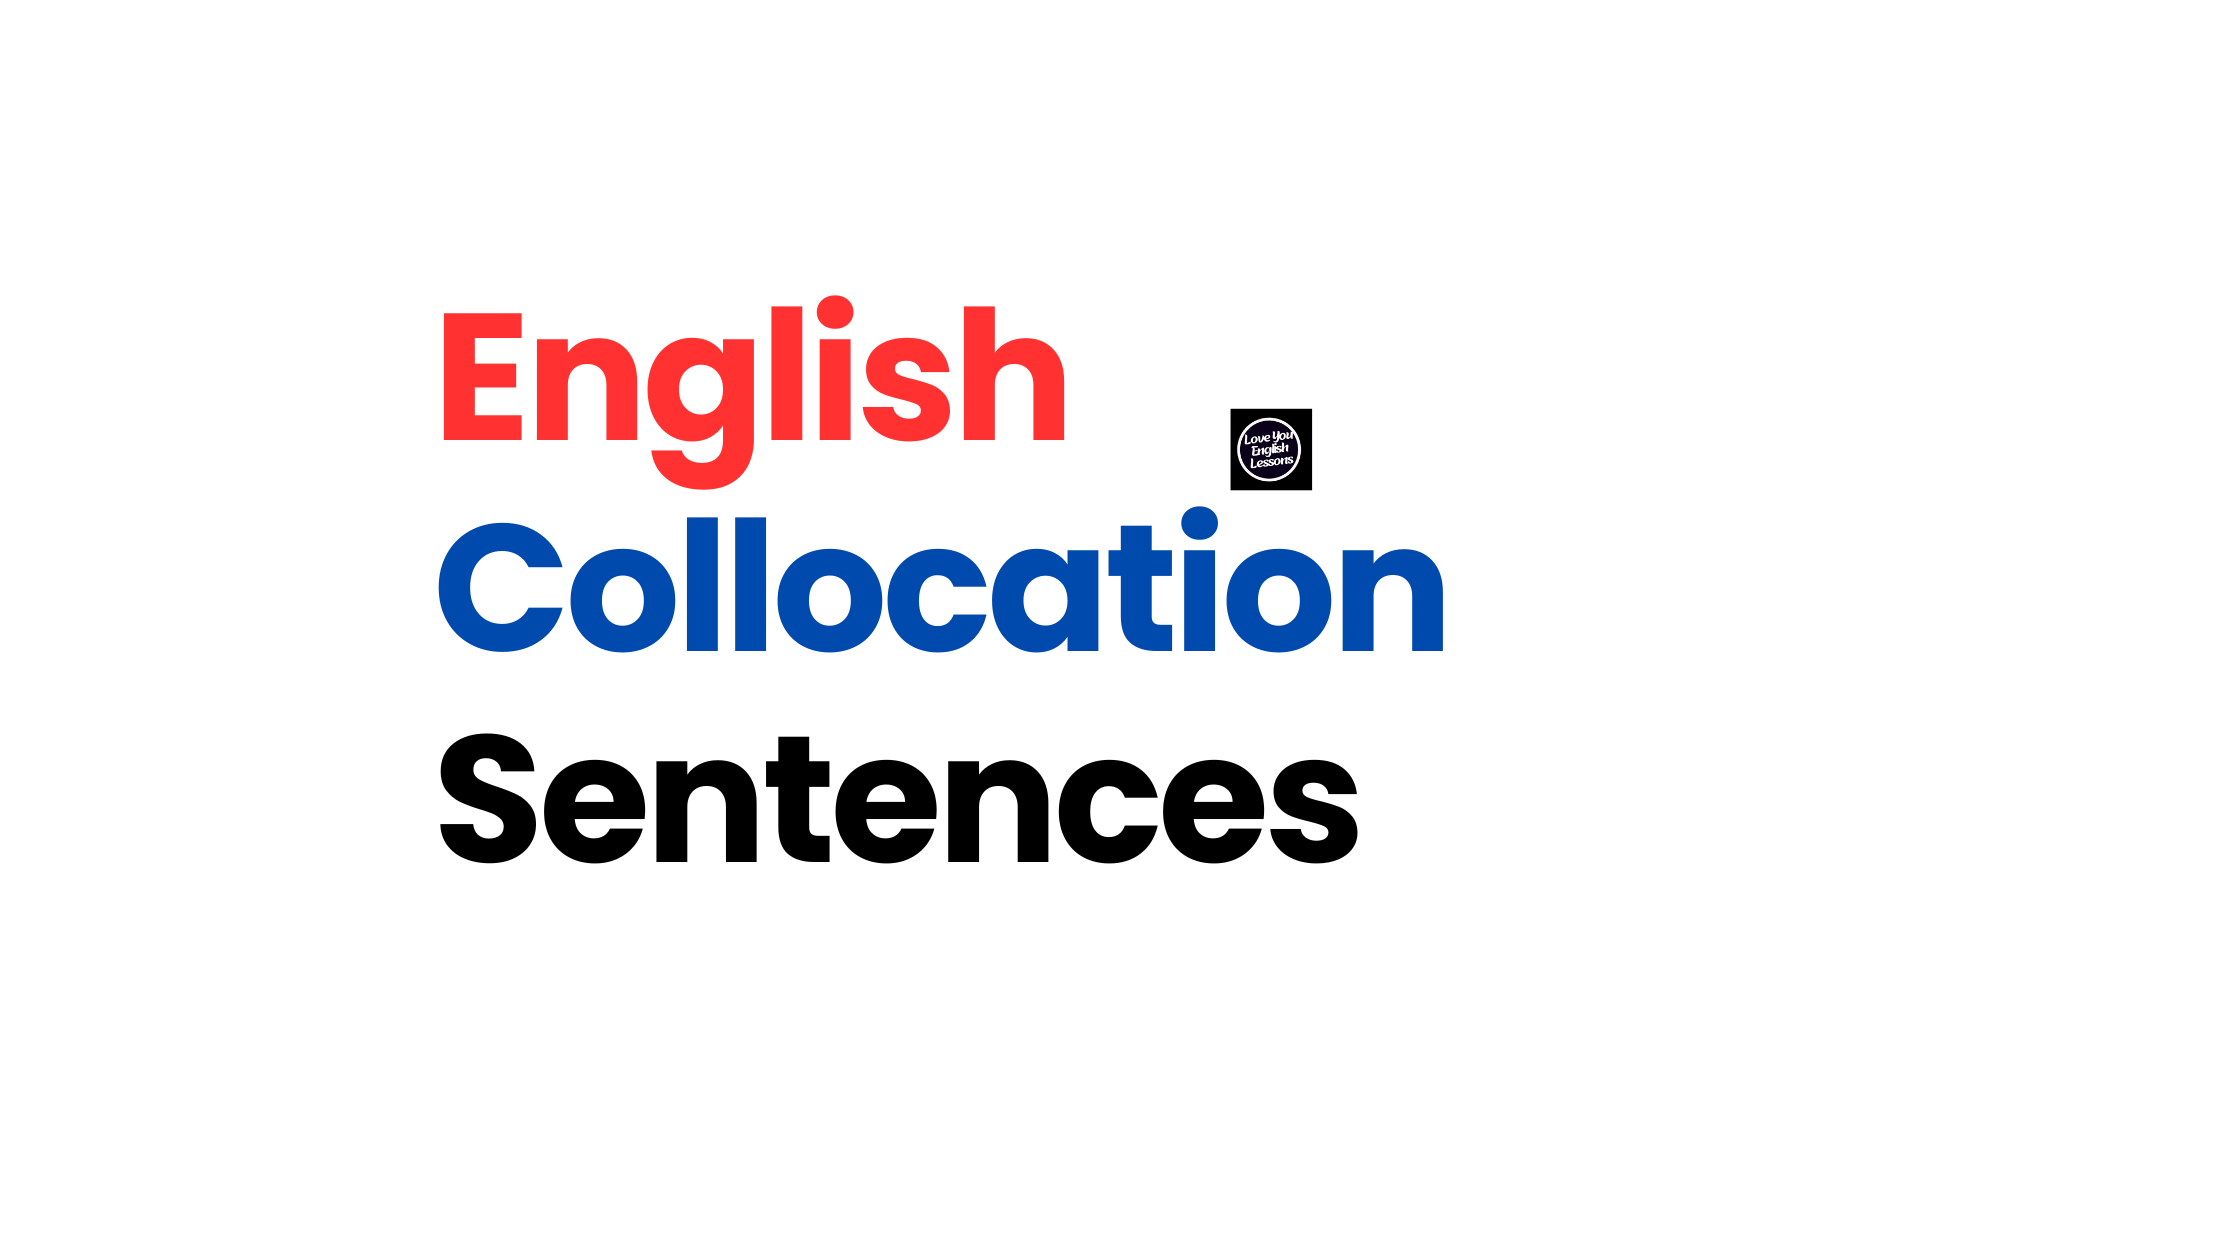 English collocations sentences